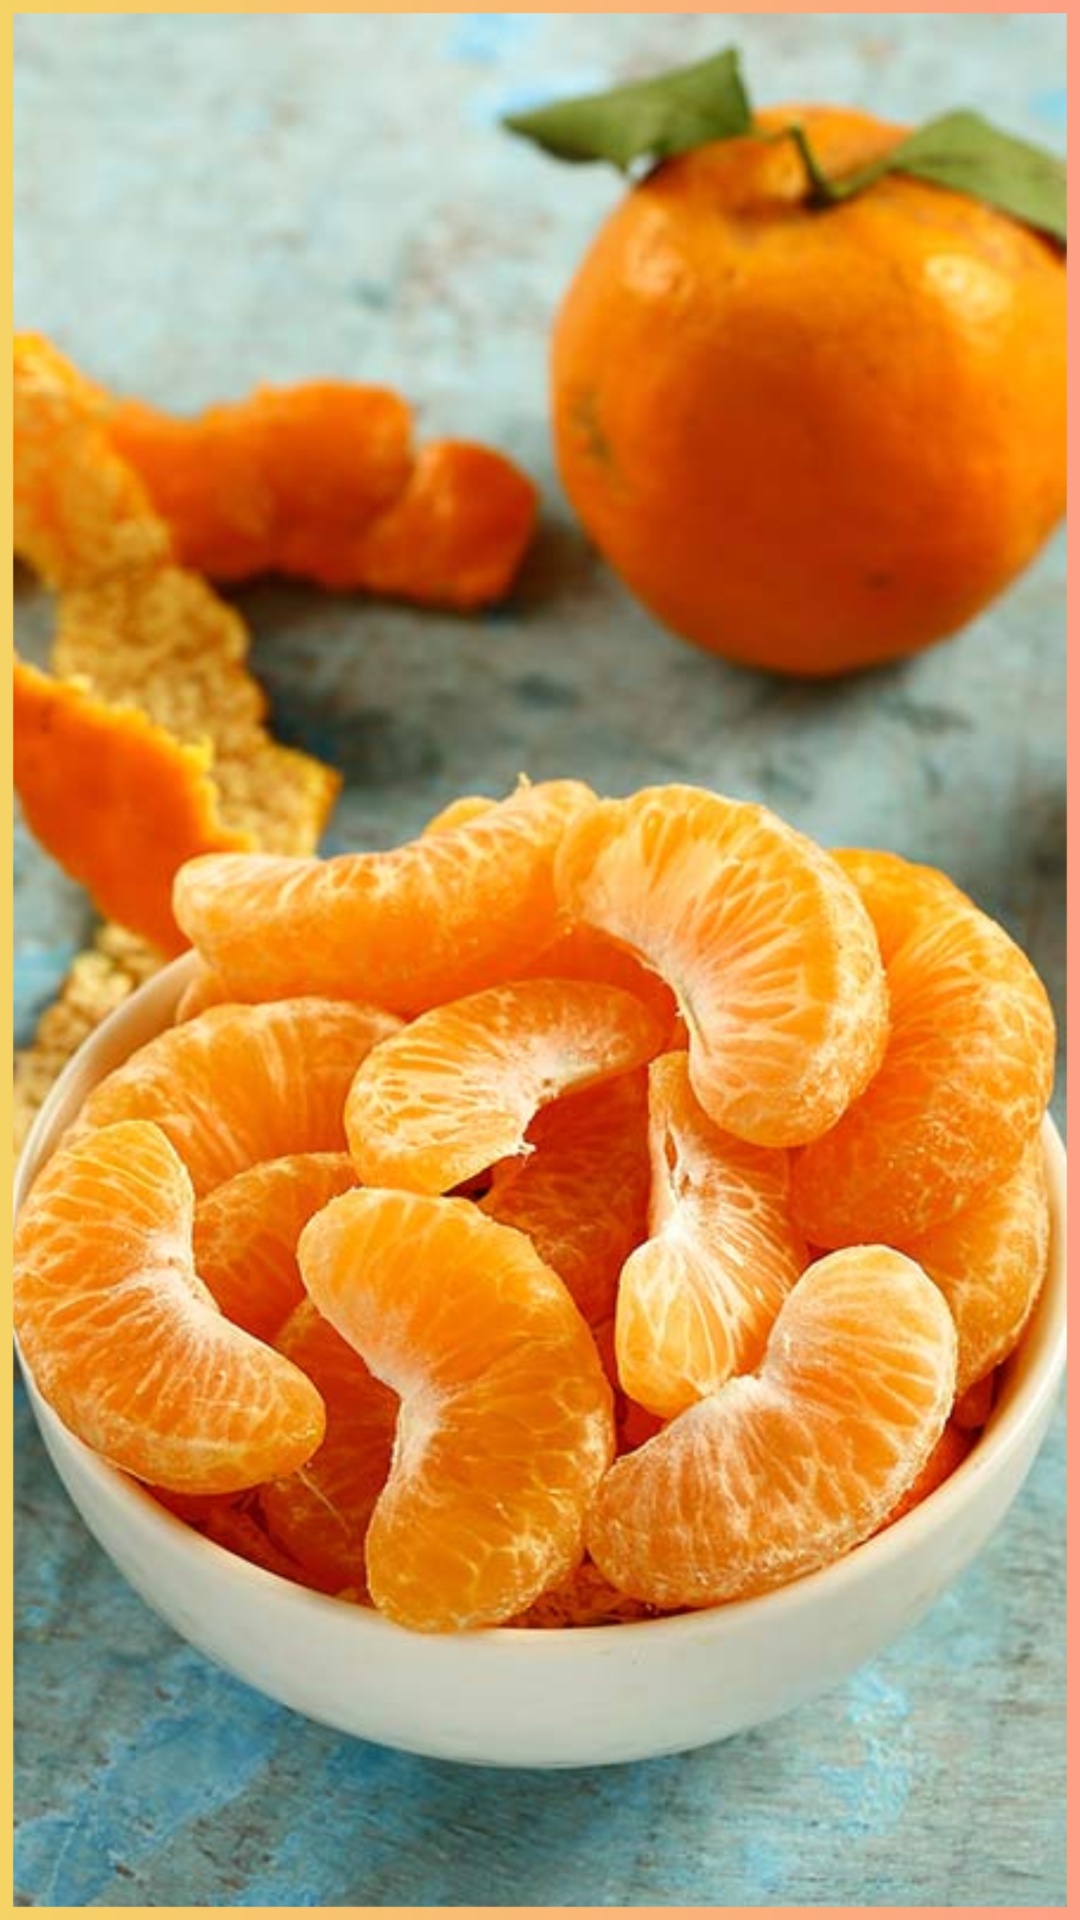 सुबह खाली पेट संतरा खाने के नुकसान